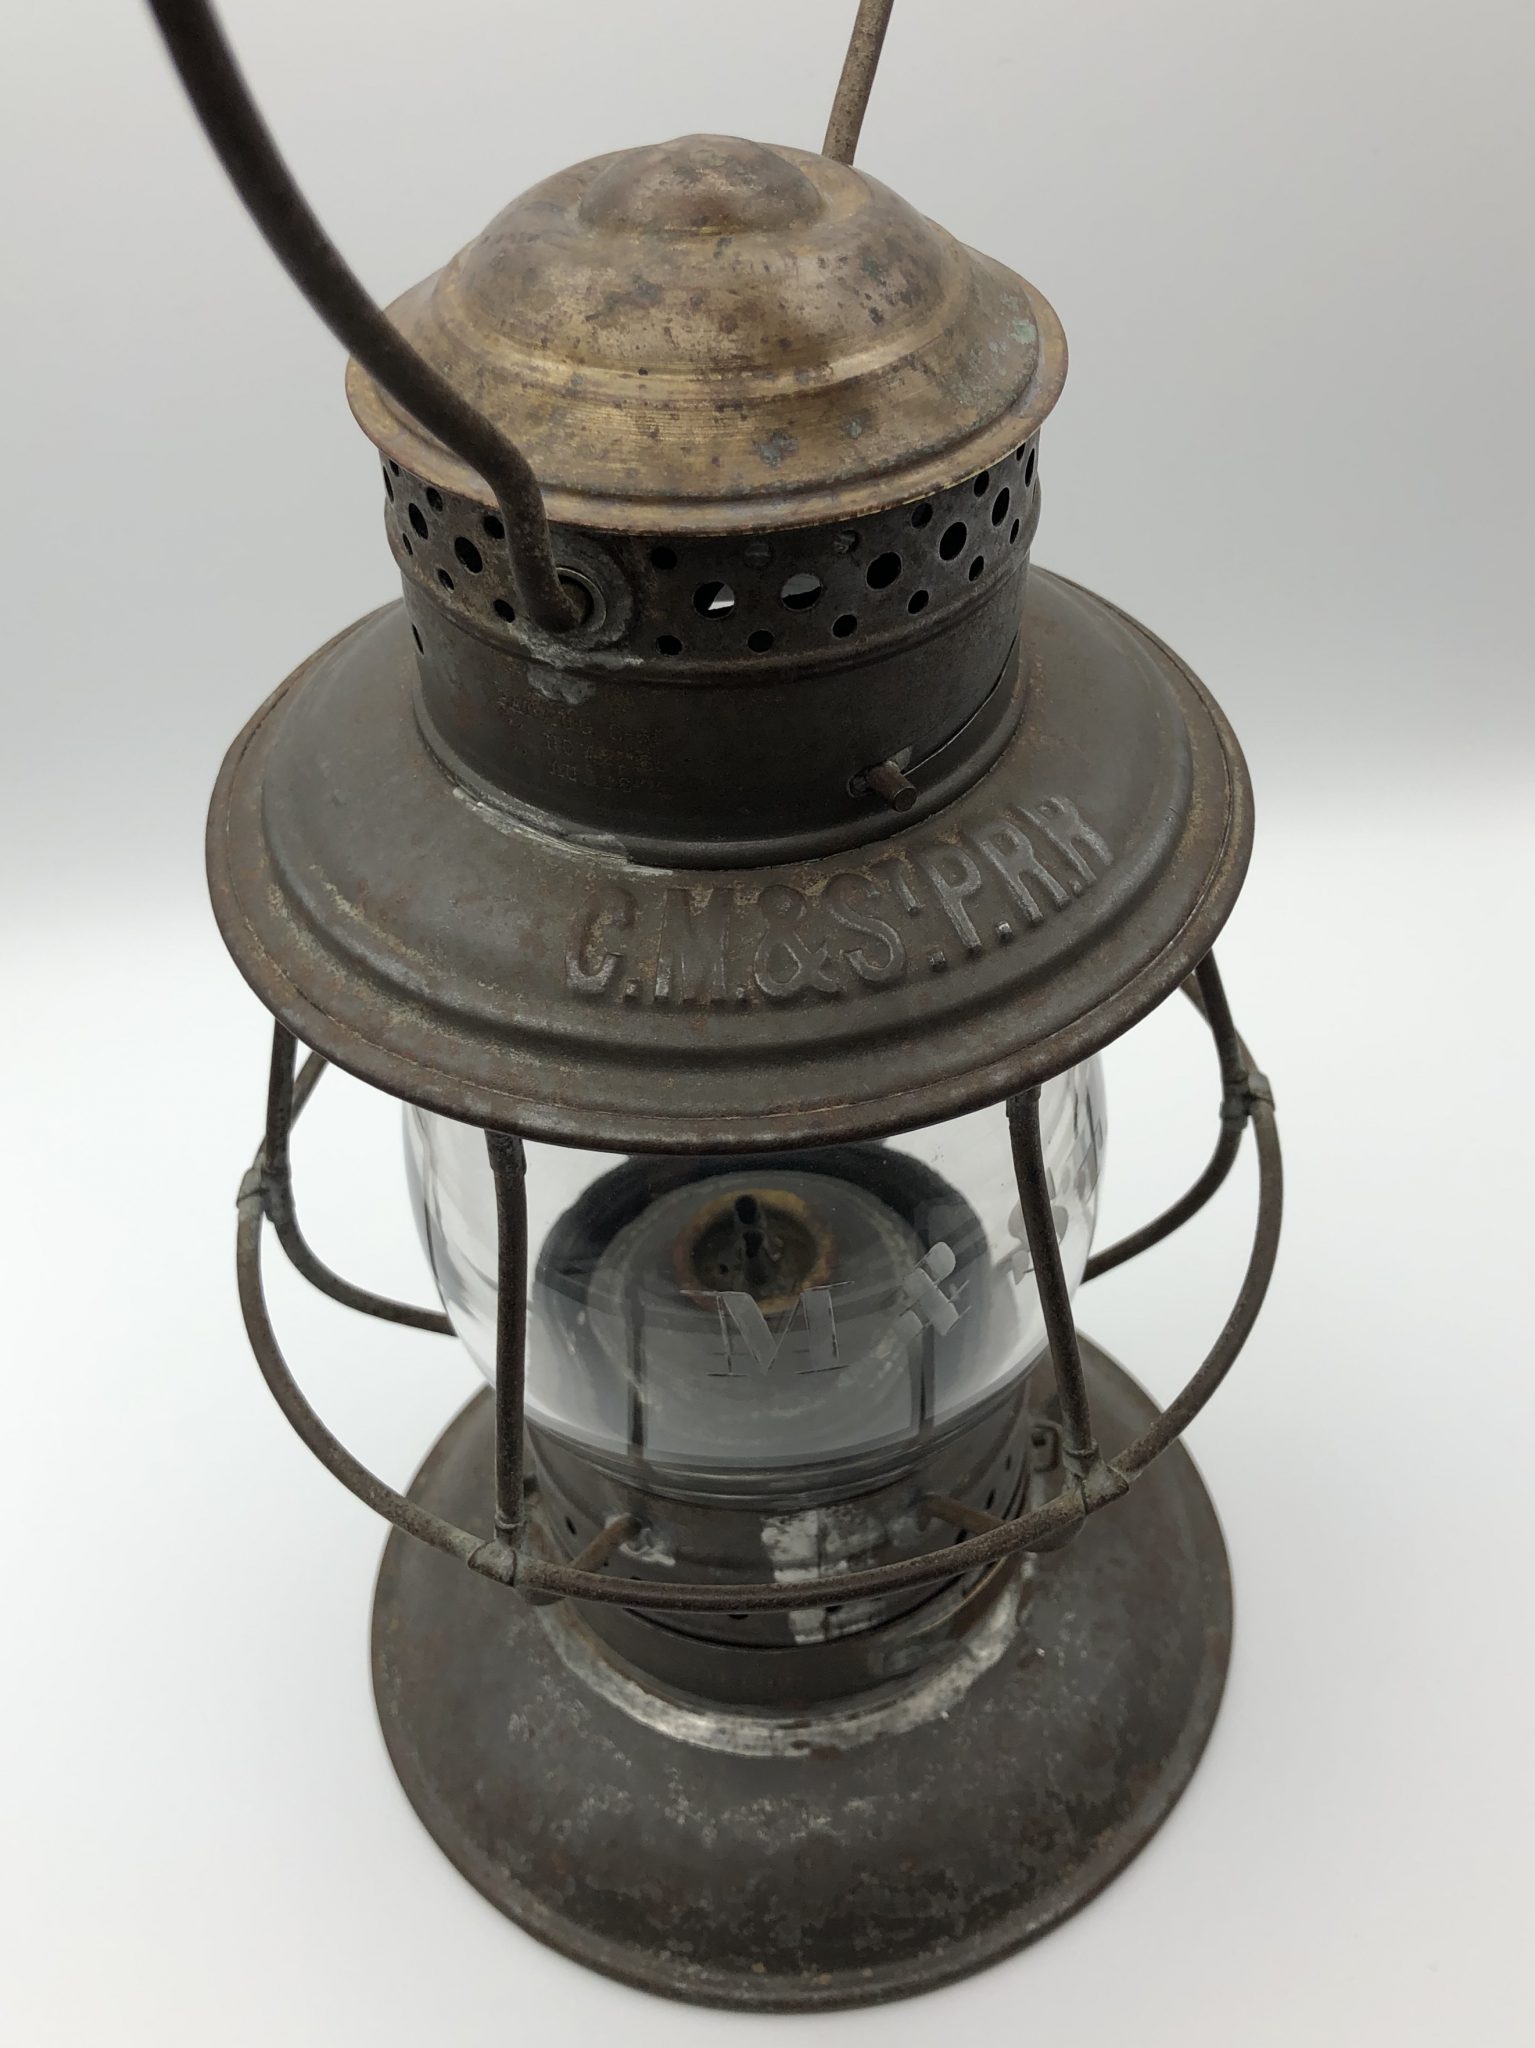 CM&STPRR Railroad Lantern